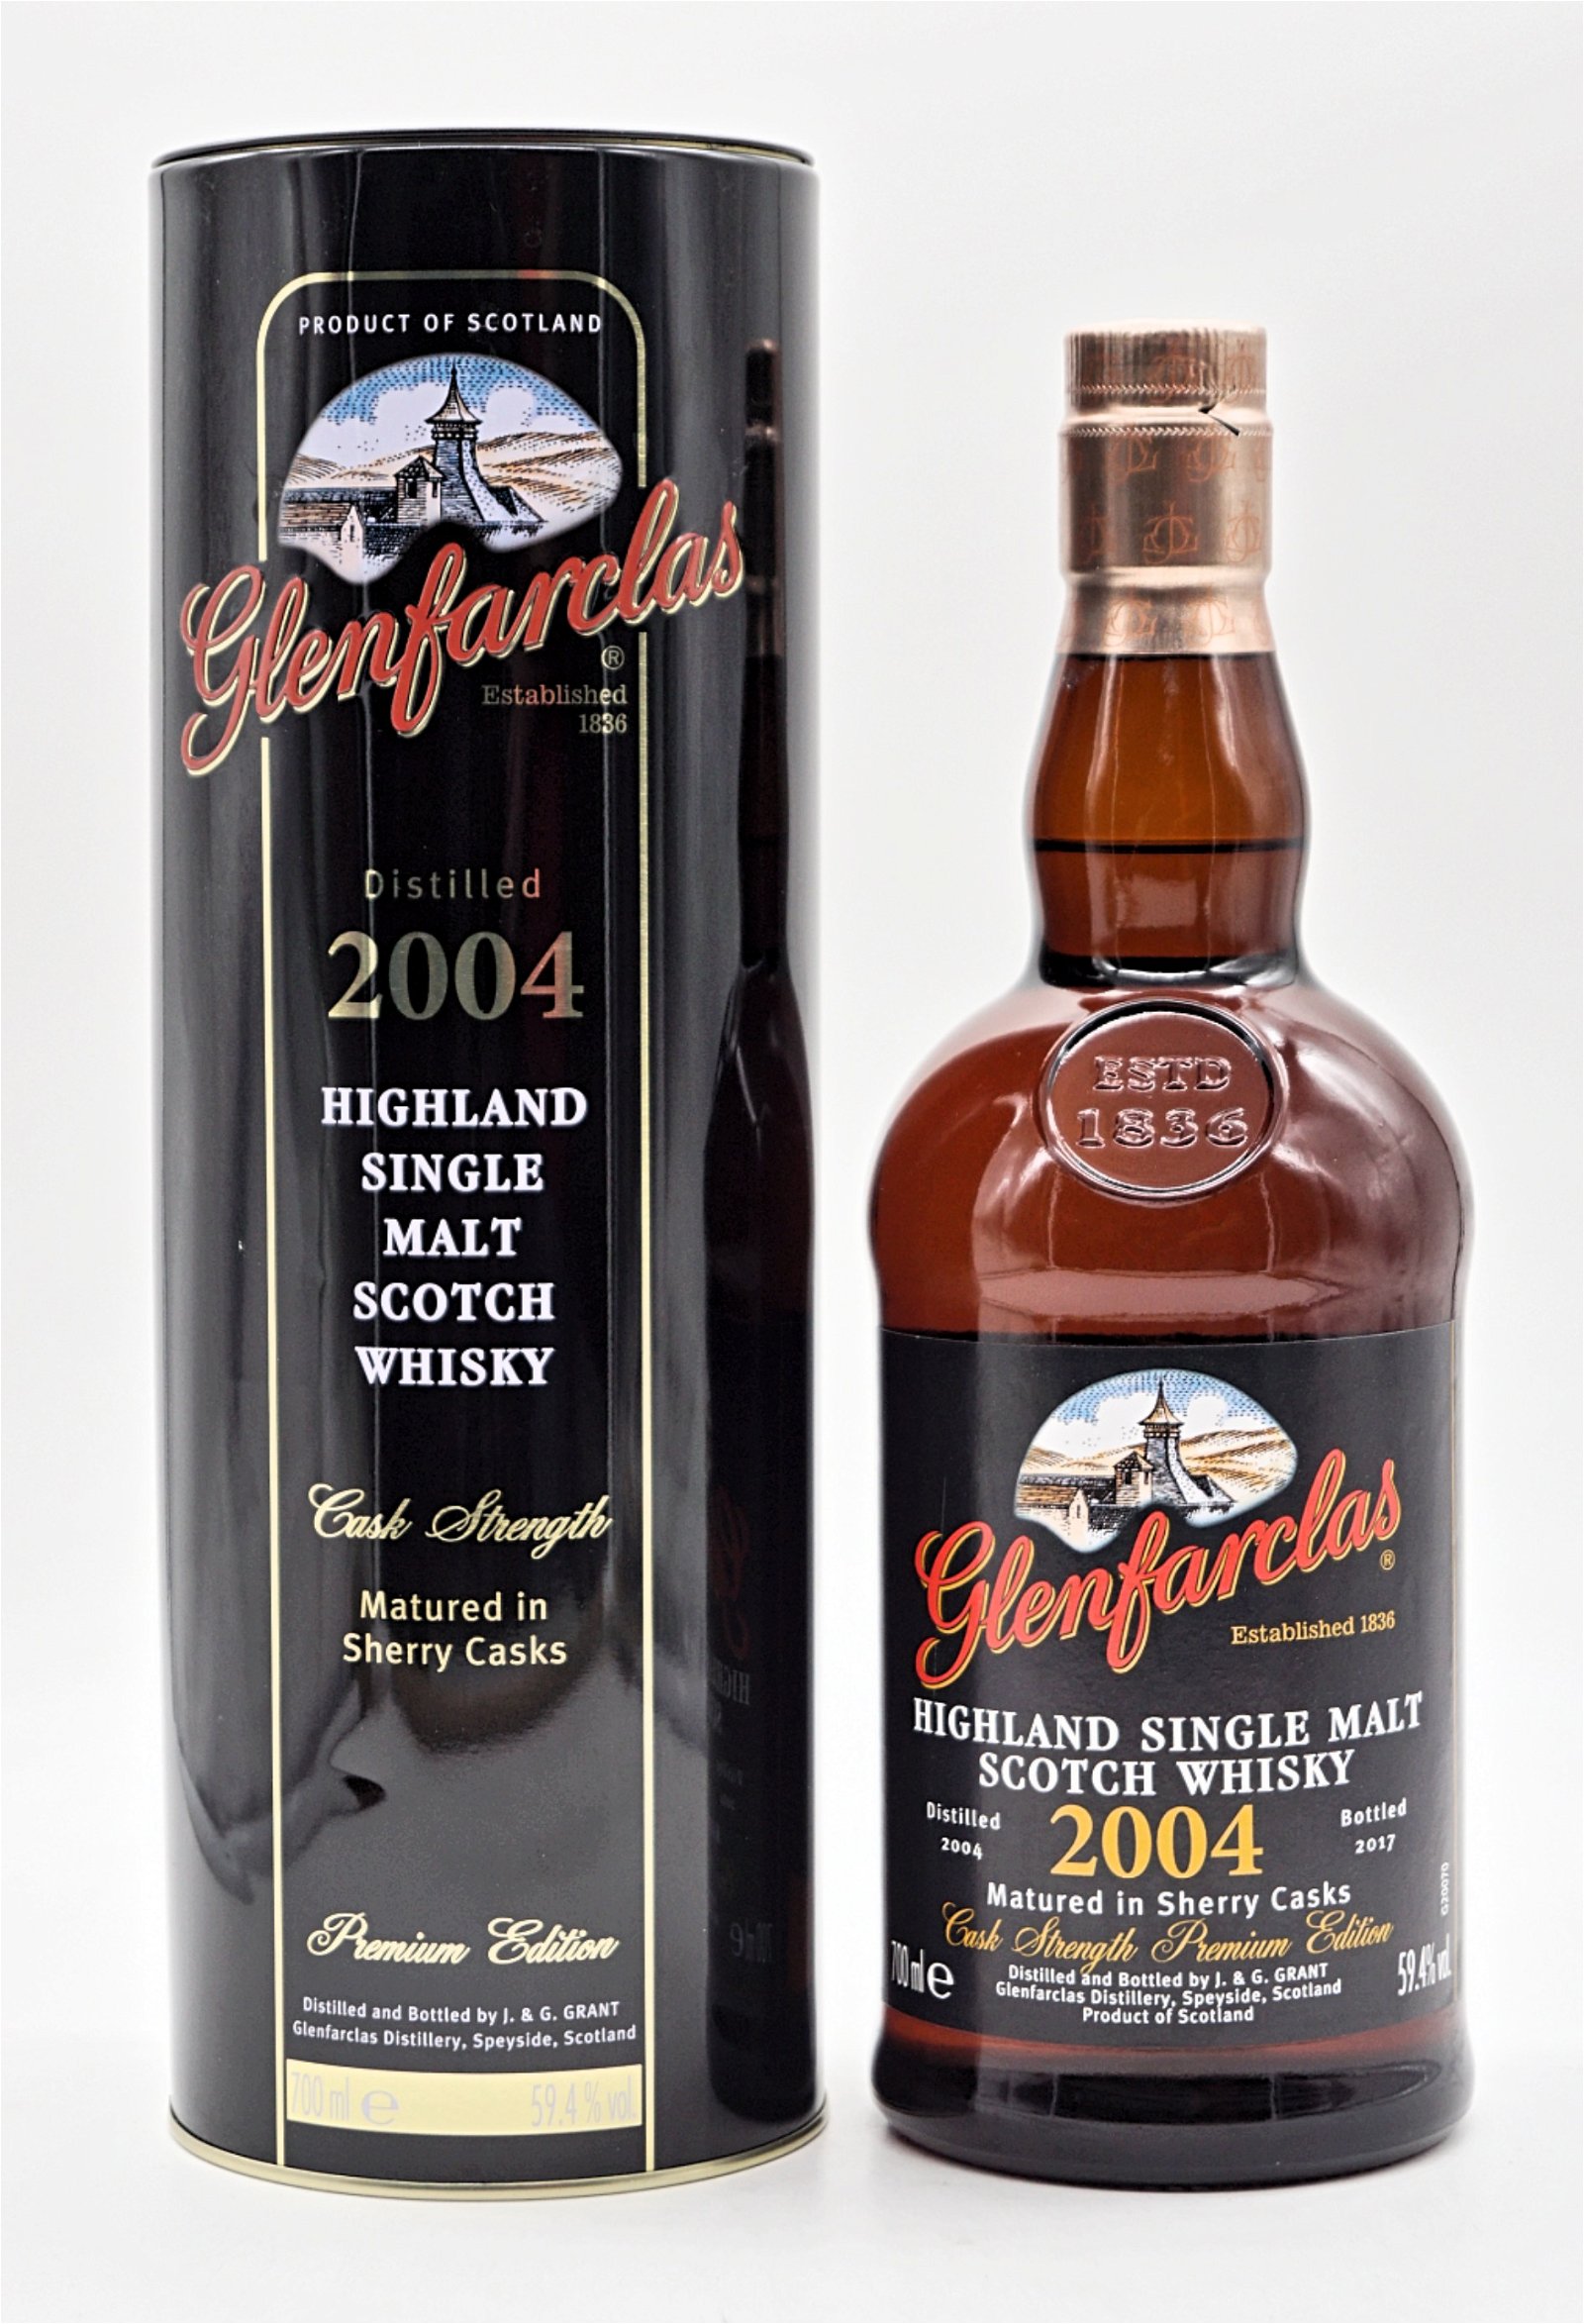 Glenfarclas 2004/2017 Premium Edition Cask Strength Highland Single Malt Scotch Whisky